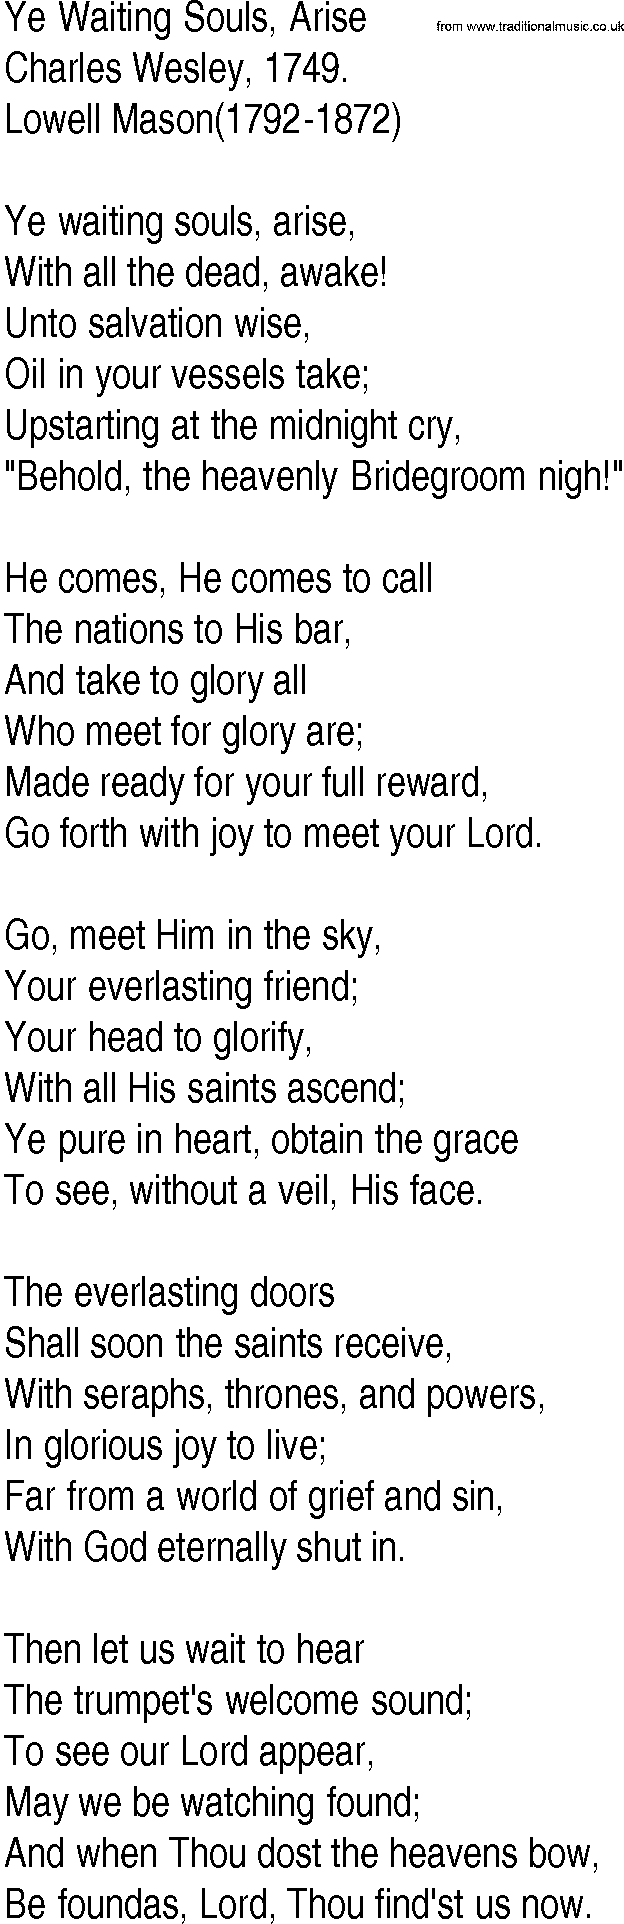 Hymn and Gospel Song: Ye Waiting Souls, Arise by Charles Wesley lyrics